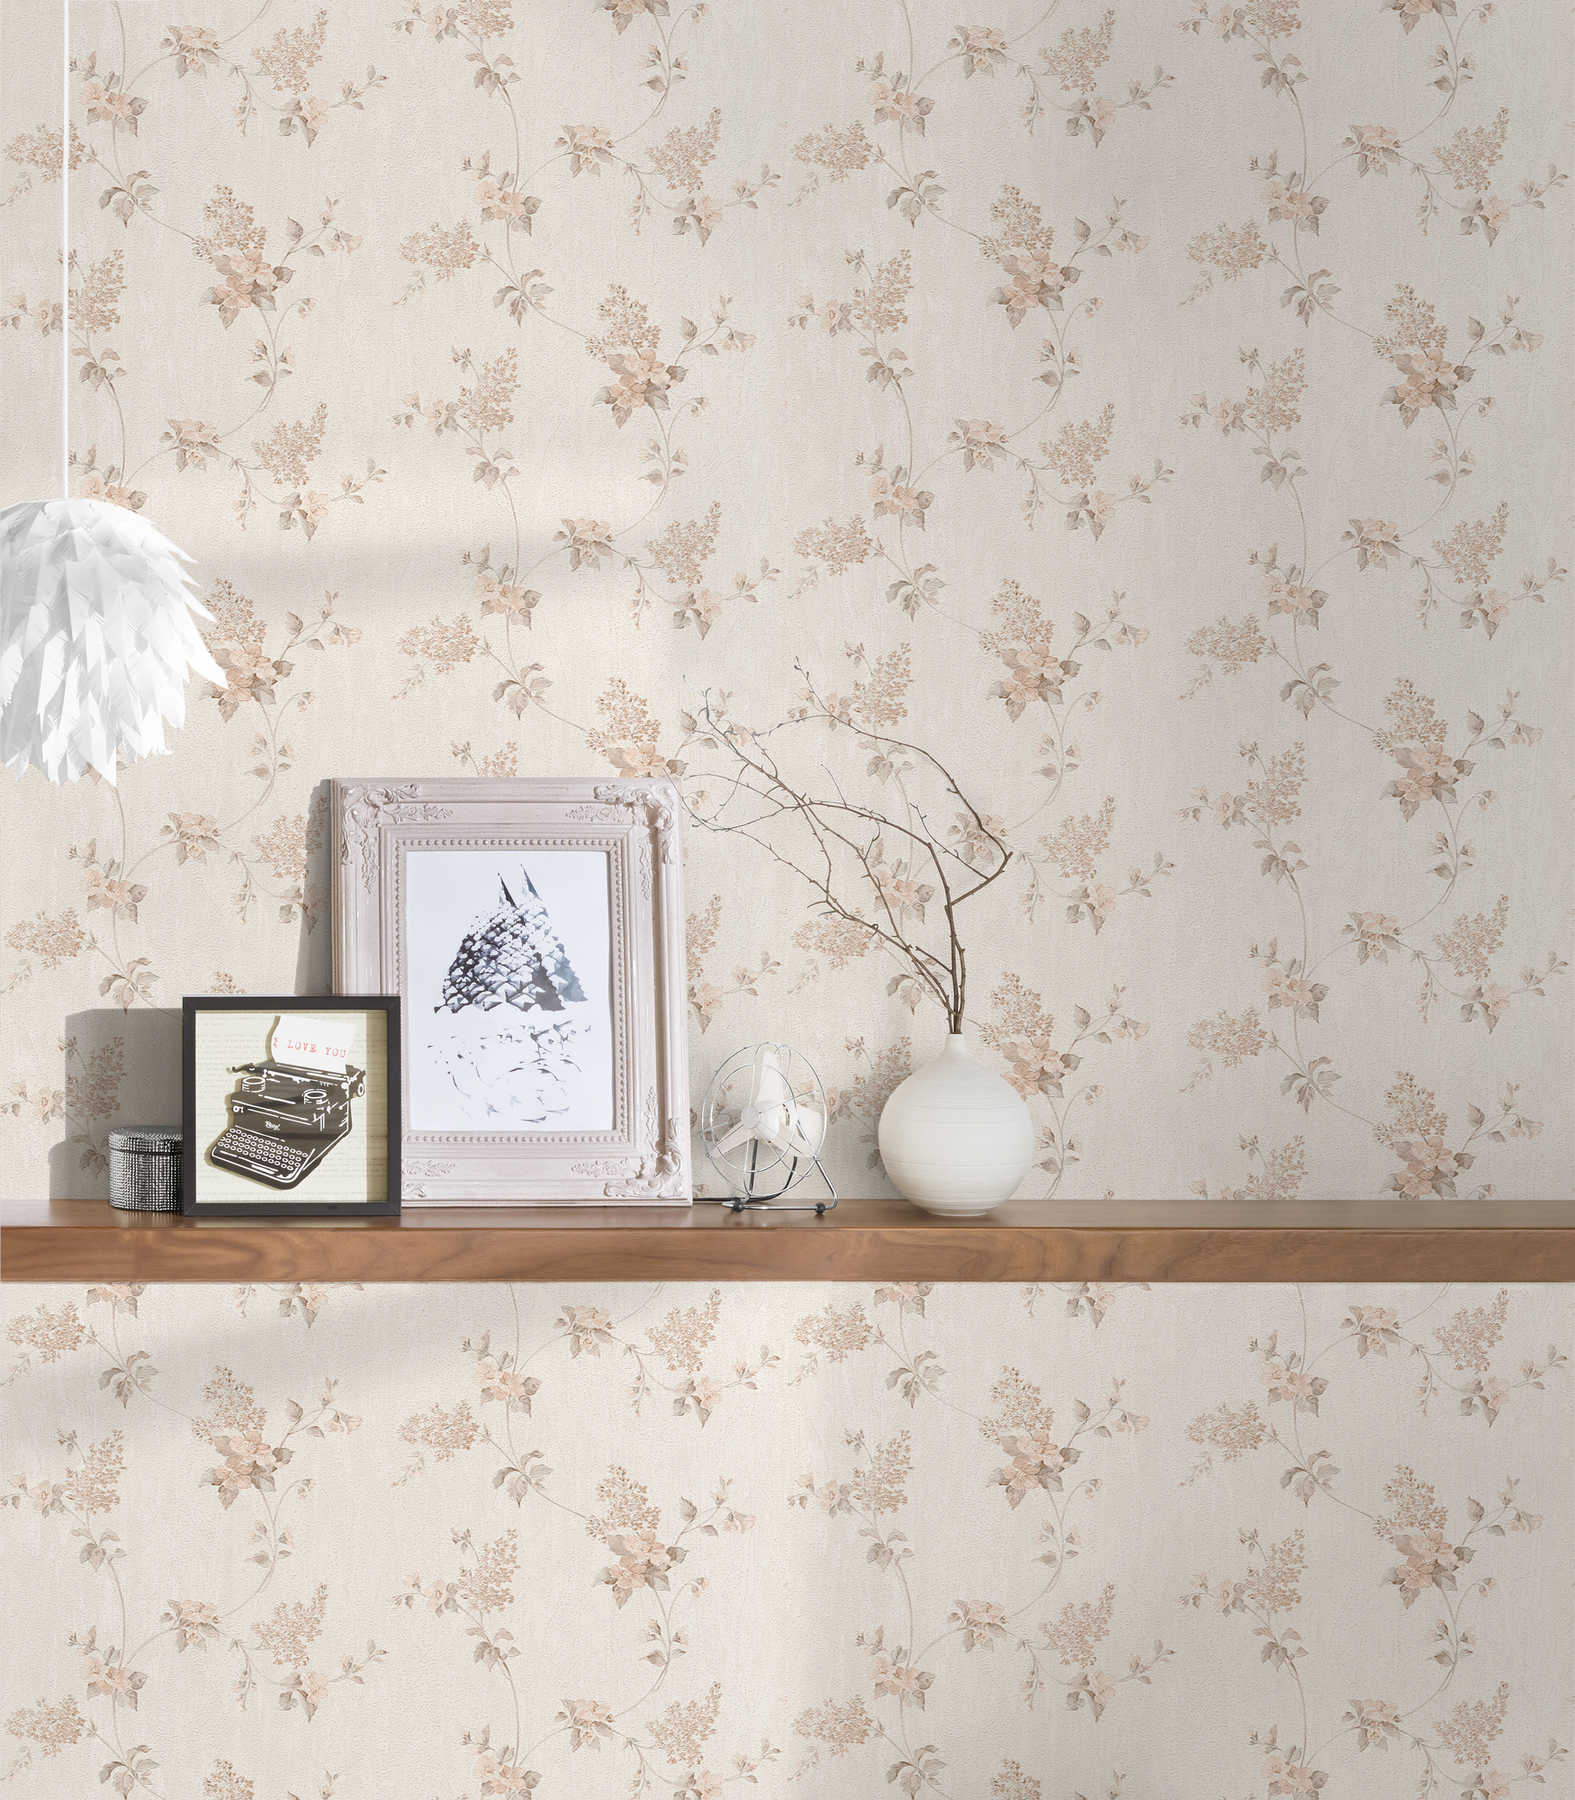             Vintage wallpaper floral vines & plaster look - cream
        